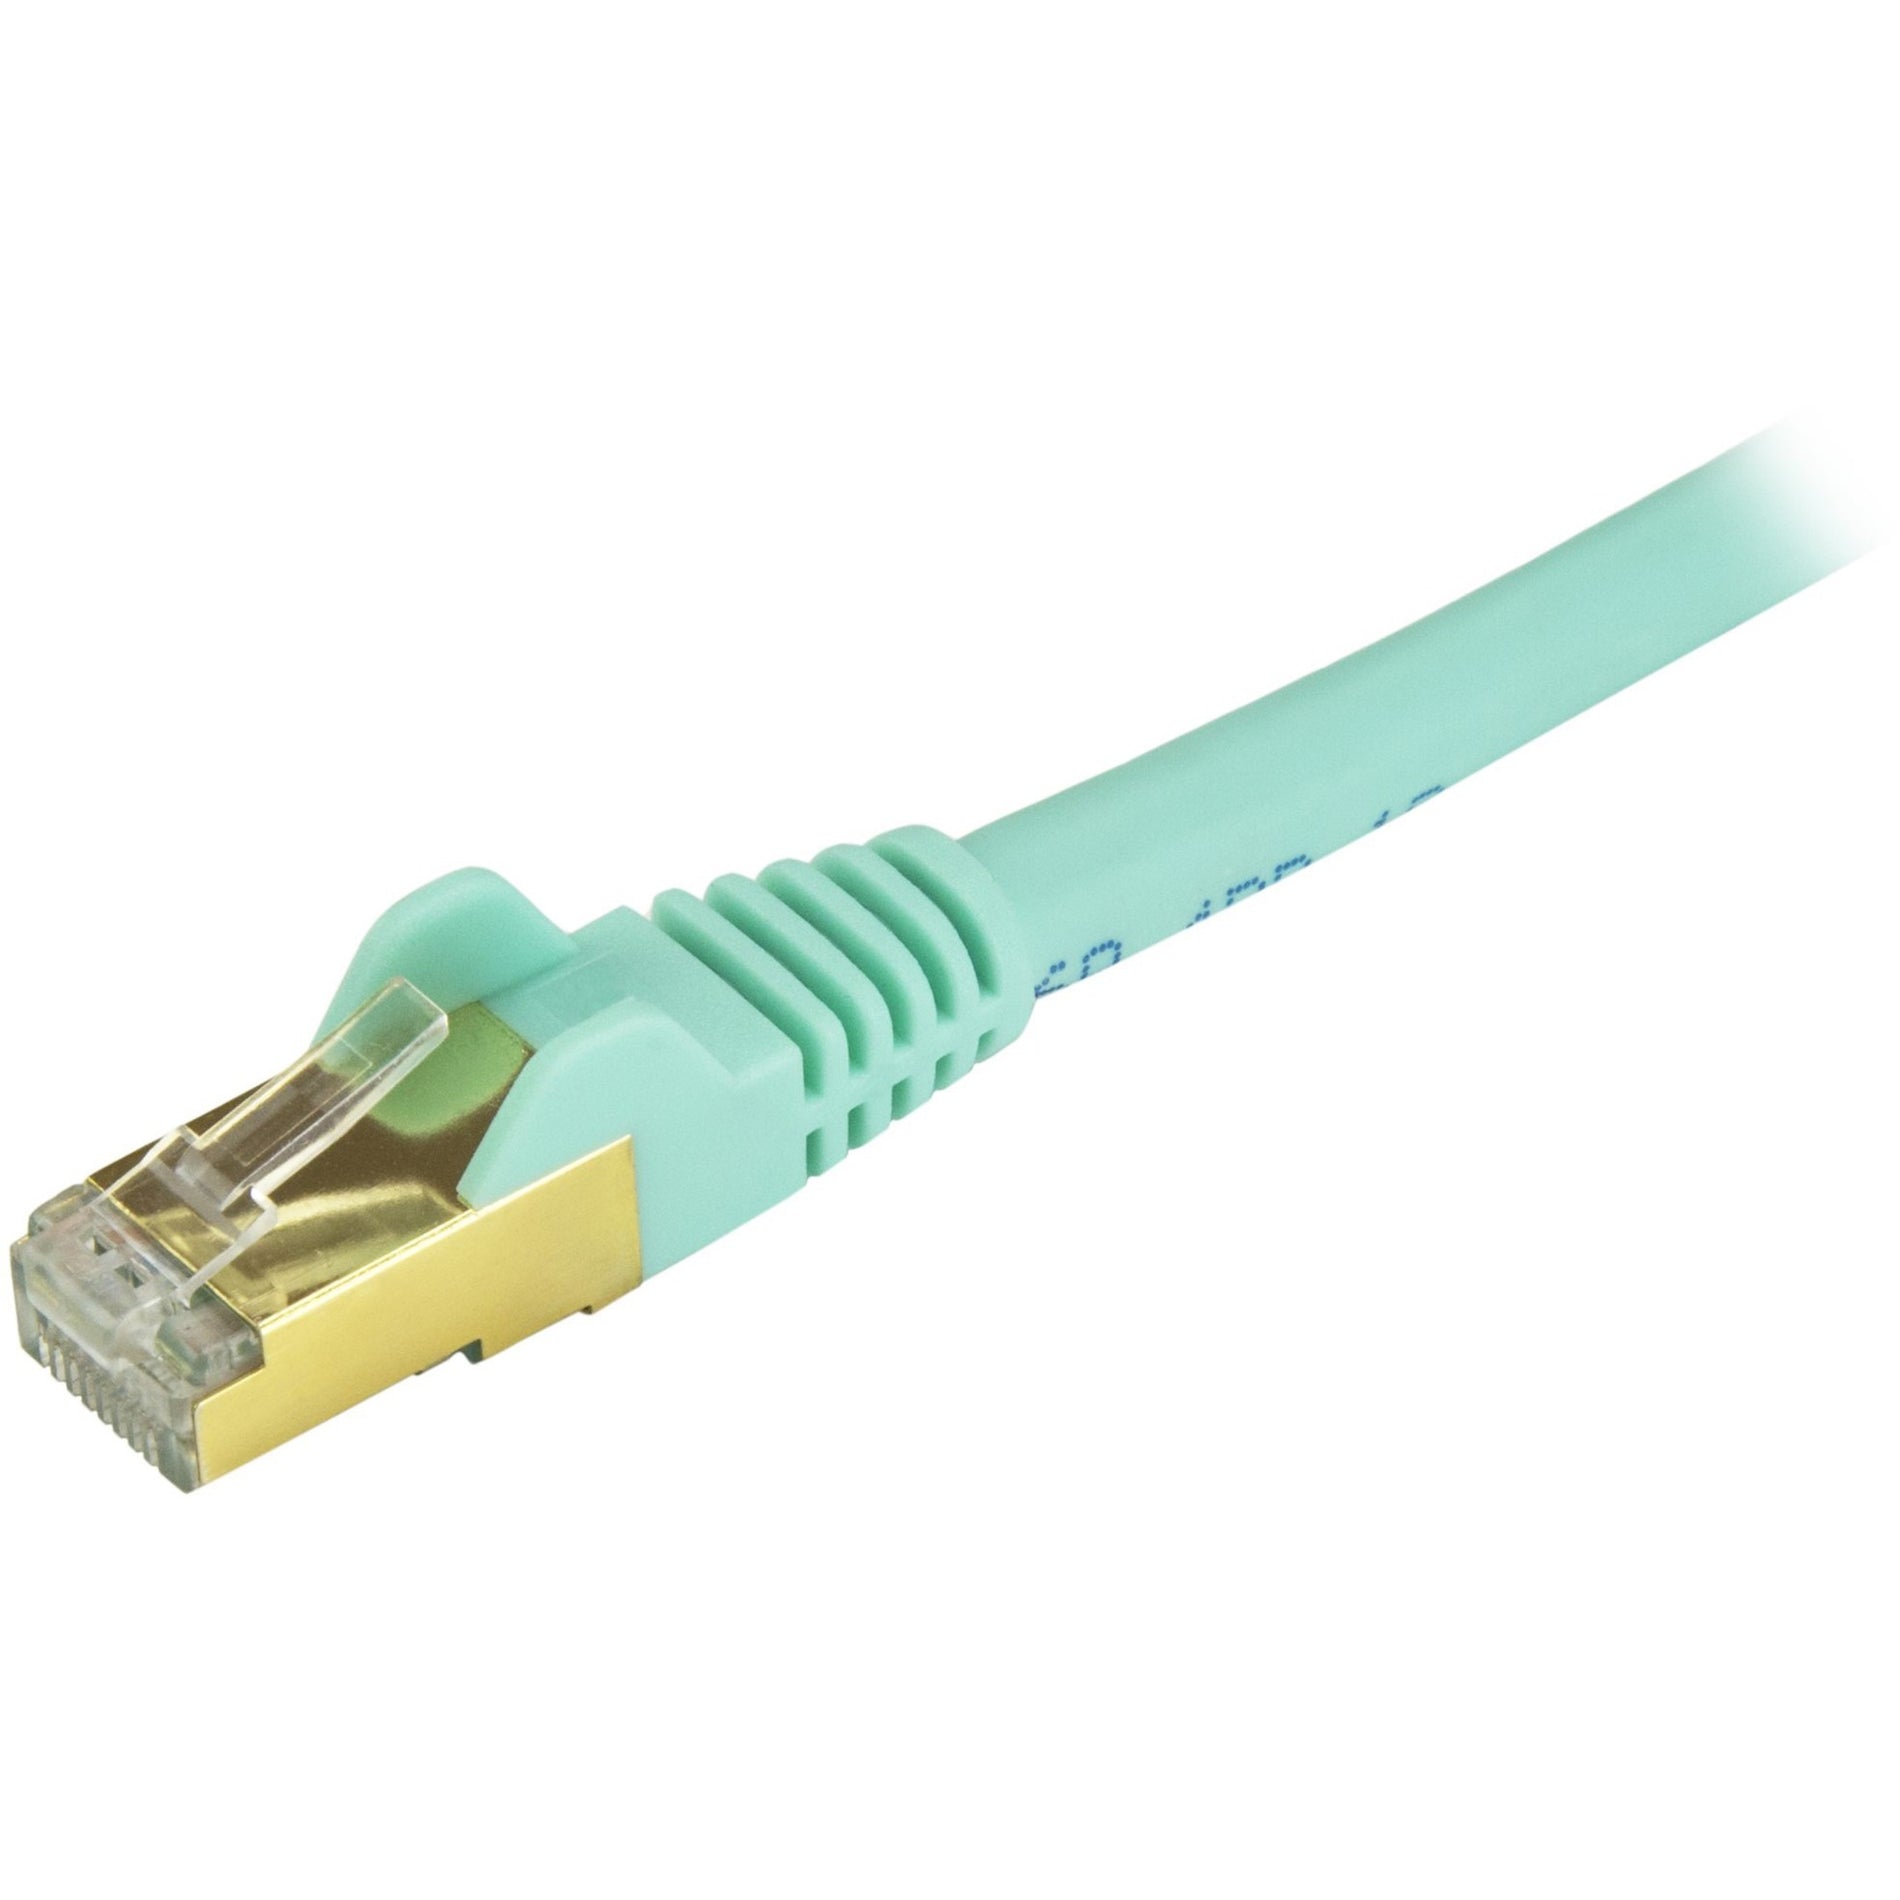 StarTech.com C6ASPAT8AQ Cat6a Ethernet Patch Cable - Shielded (STP) - 8 ft. Aqua Snagless RJ45 Ethernet Cord